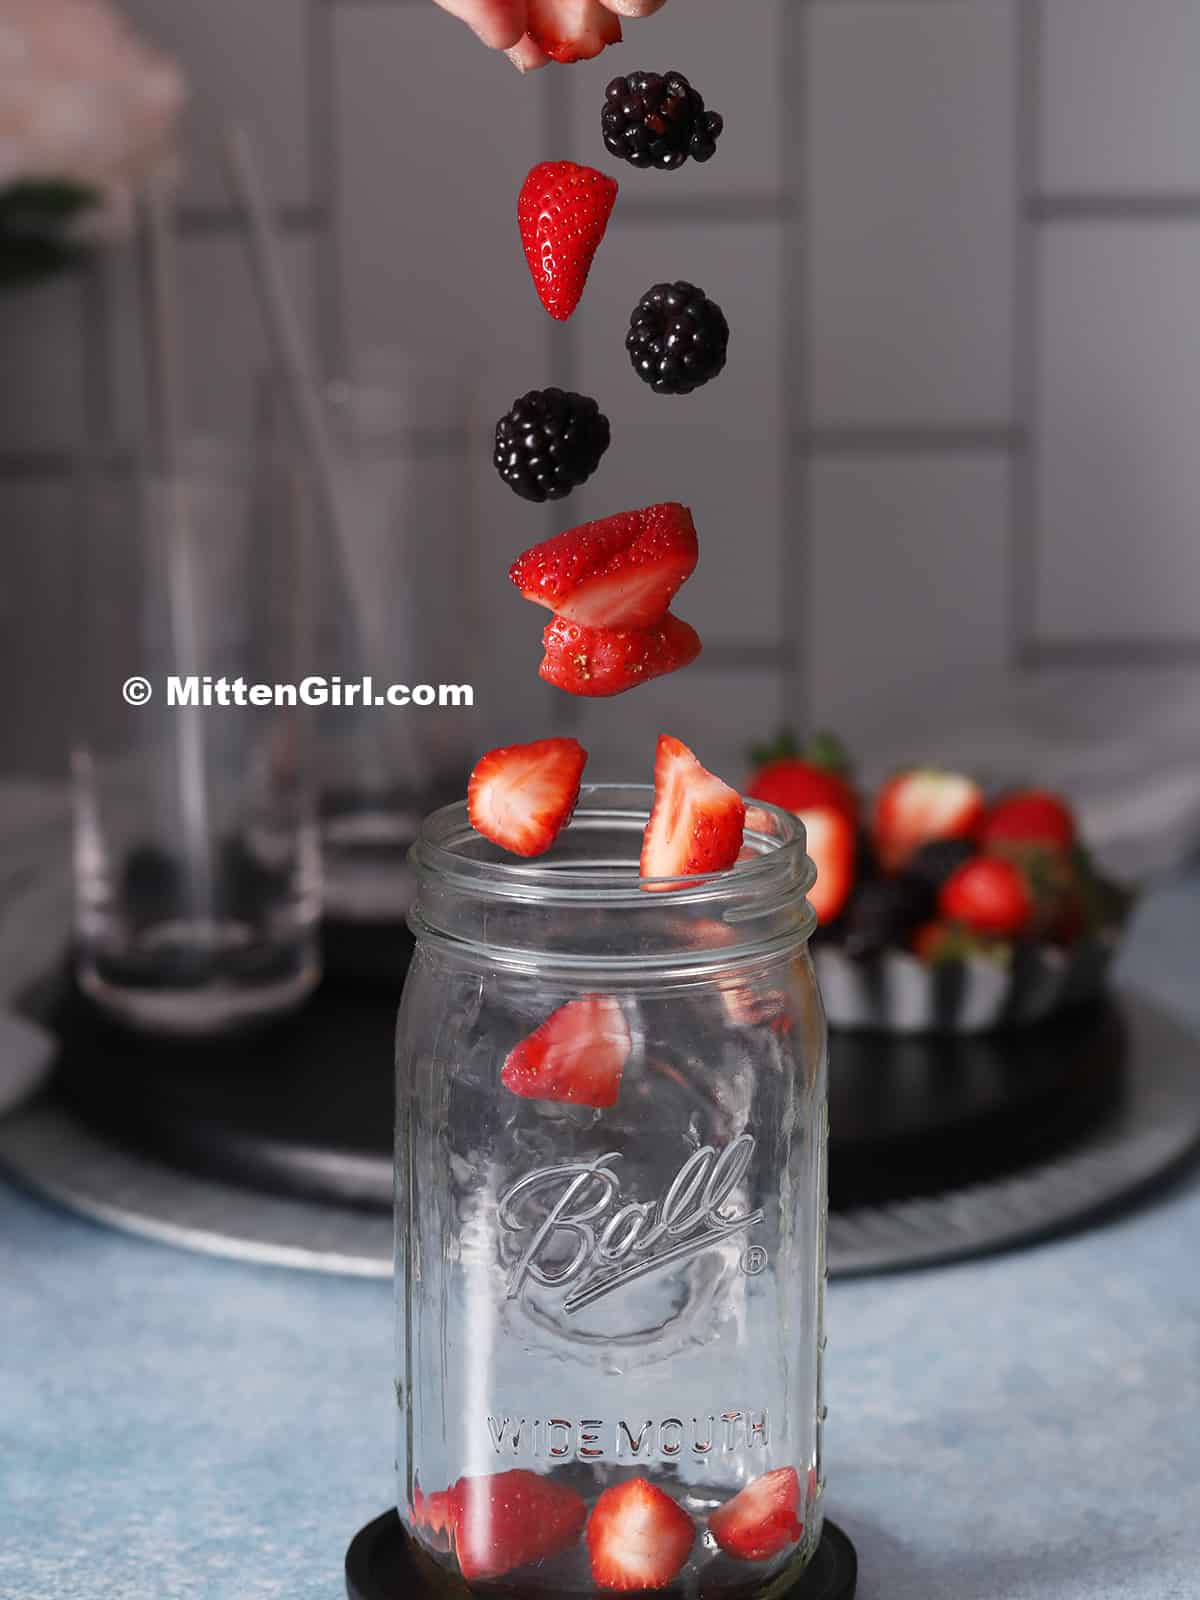 Berries falling into a quart jar.